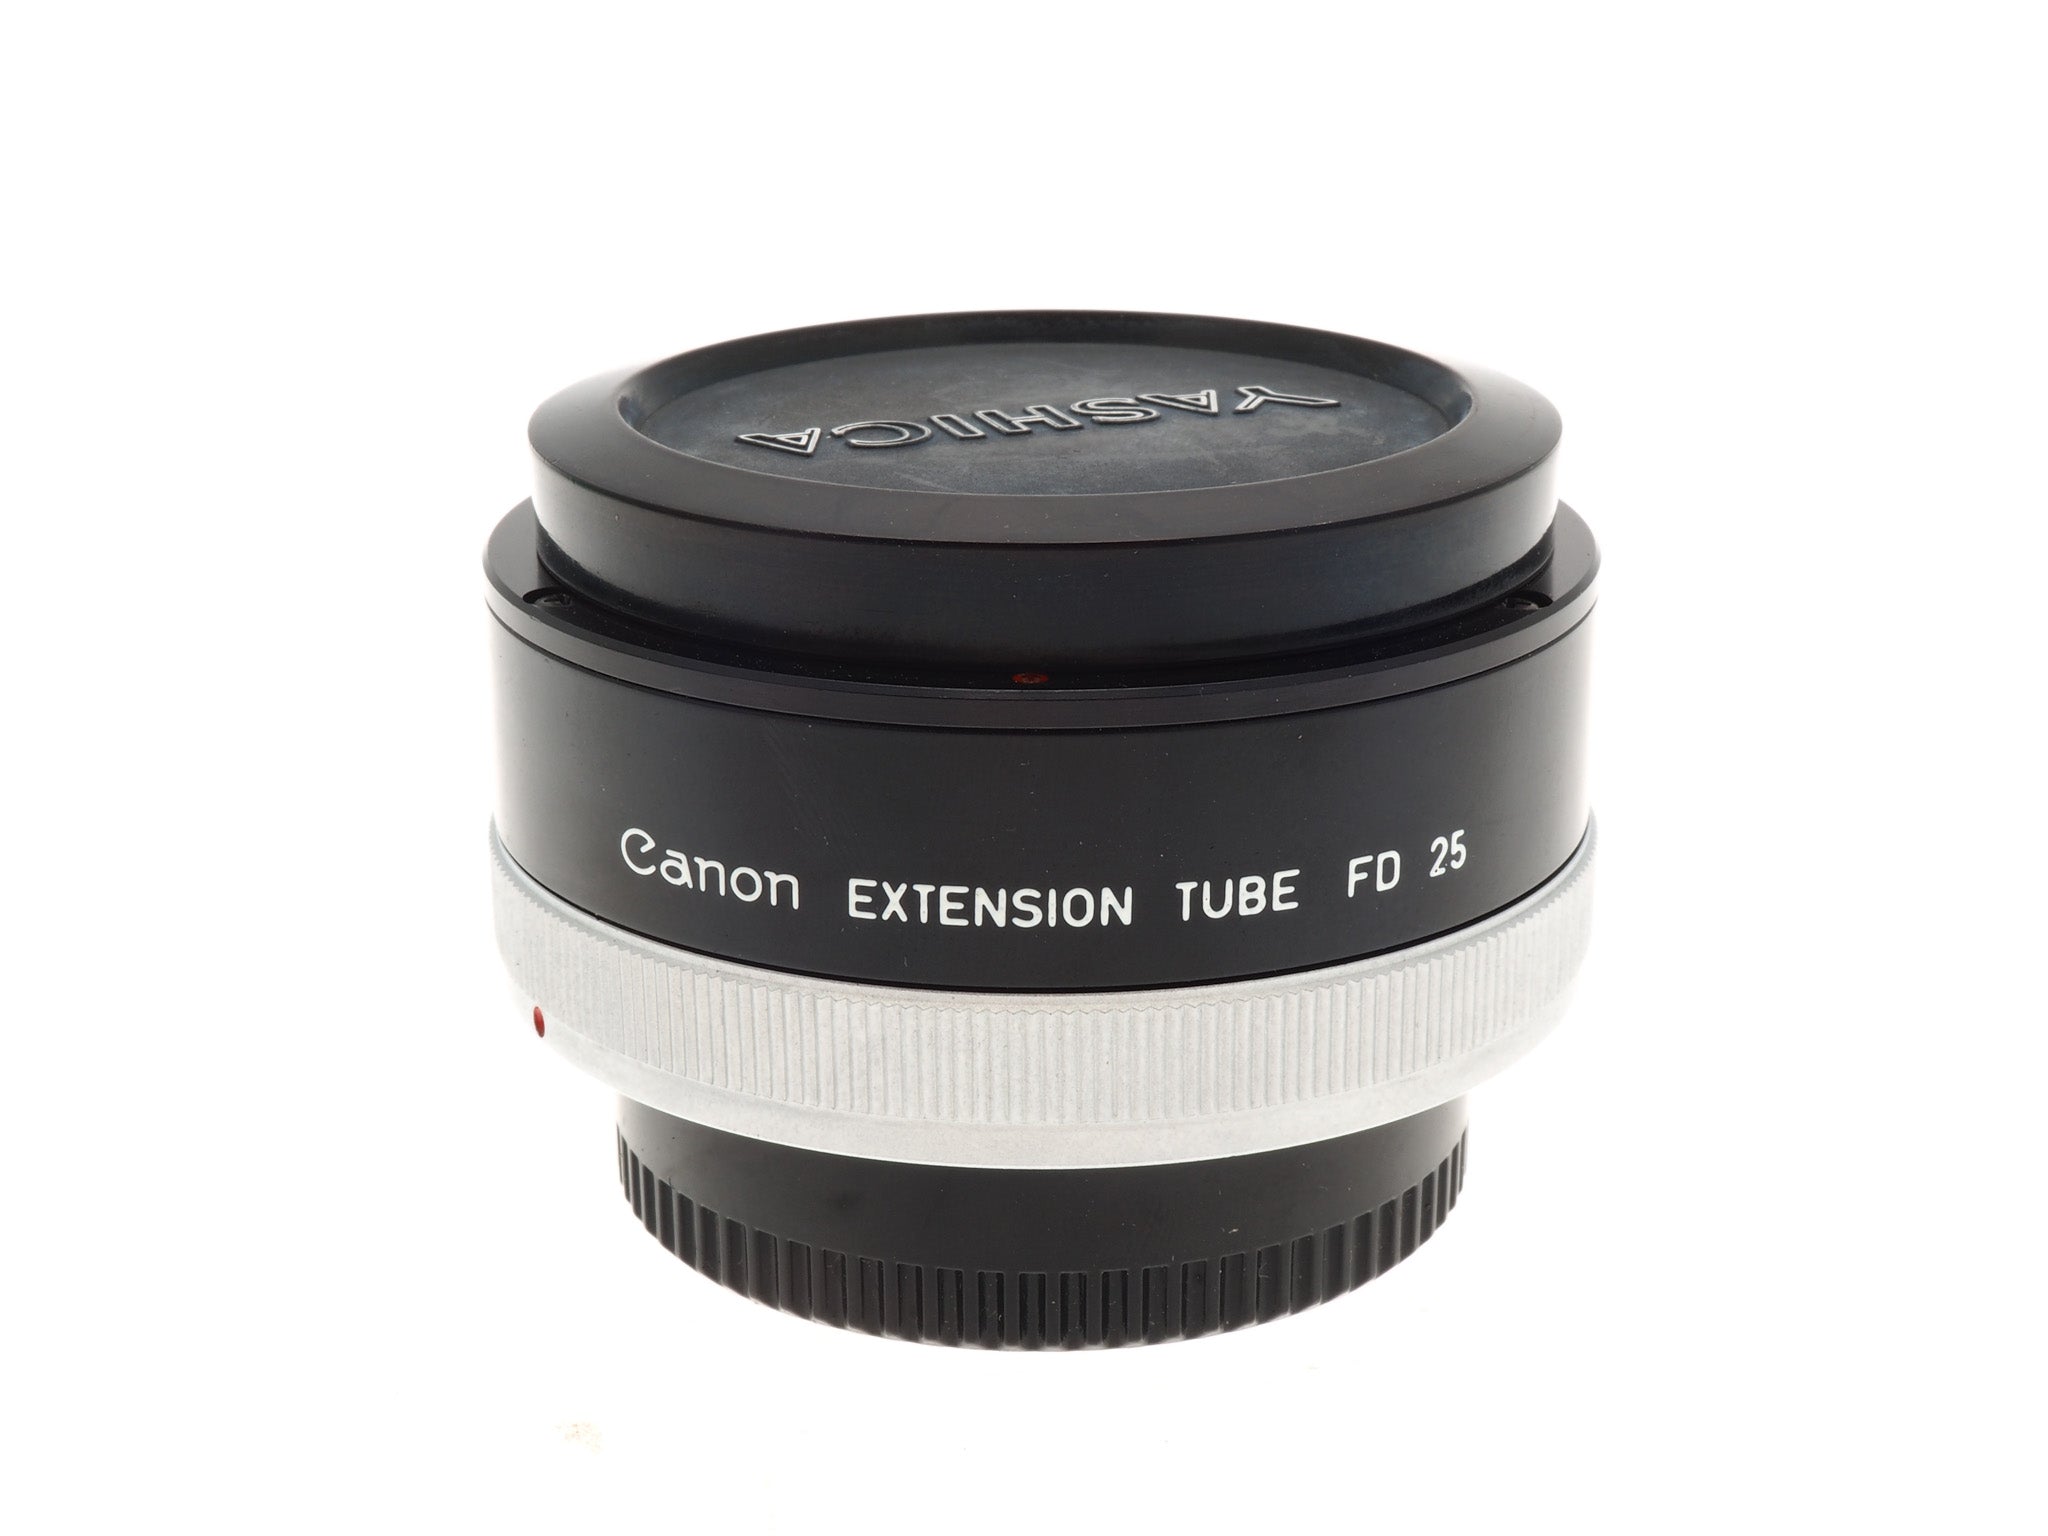 Canon EXTENSION TUBE FD 25 通販